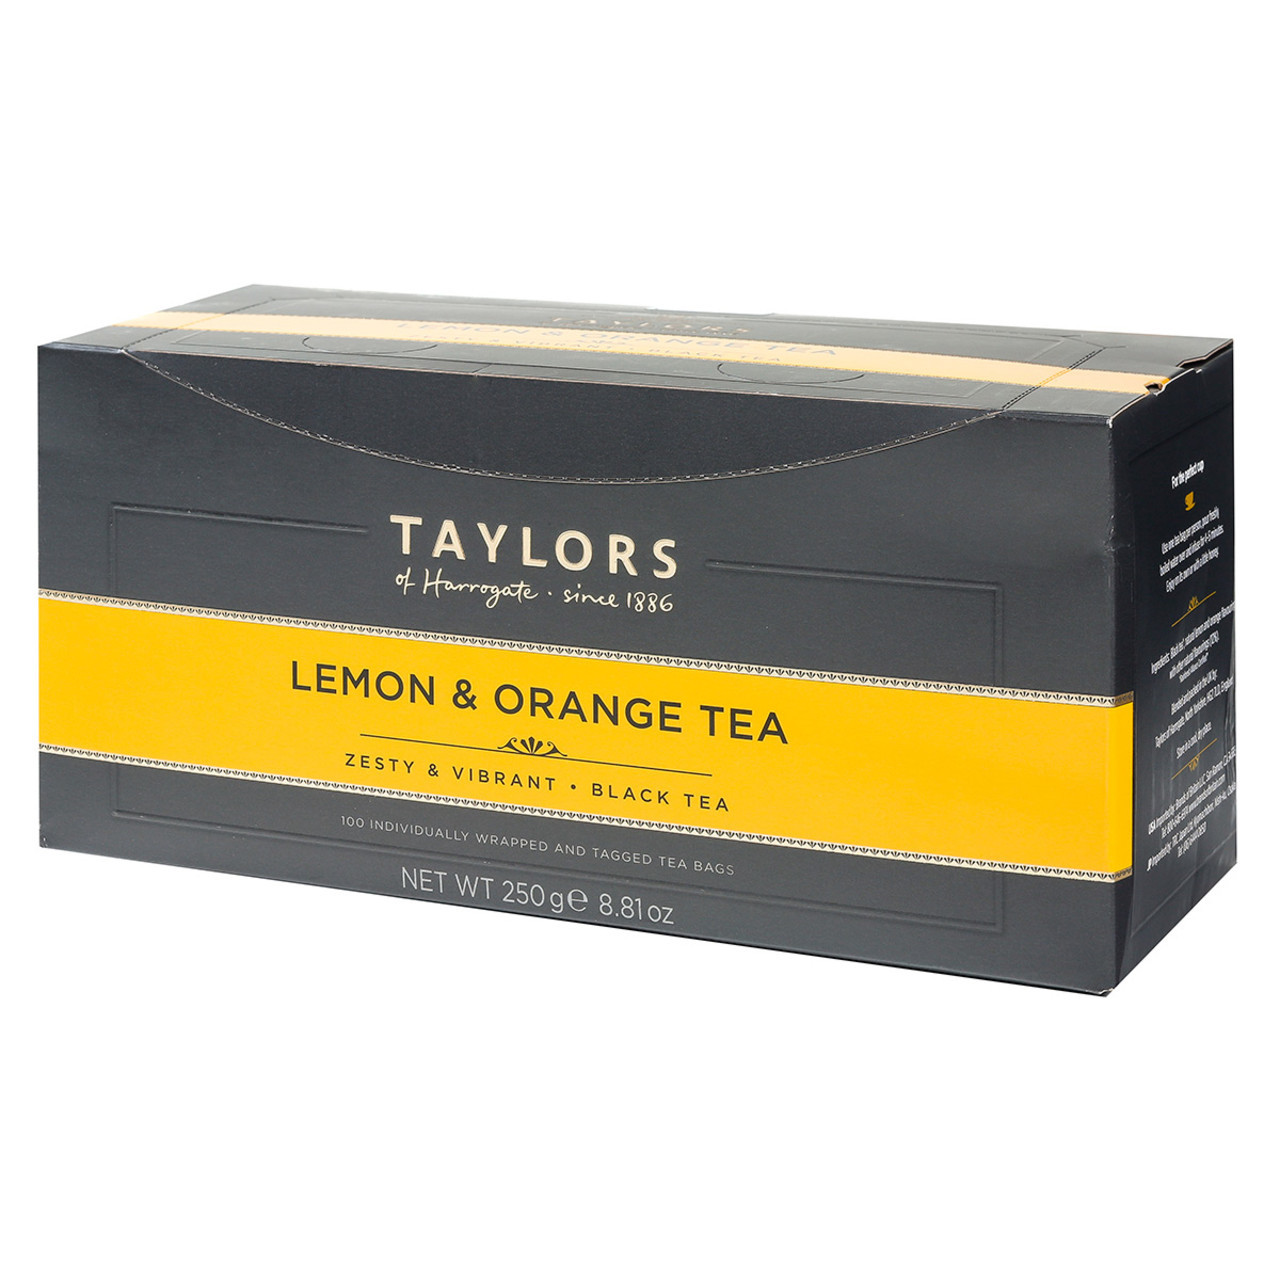 Ahmad Tea Black Tea, English Tea No.1 Teabags, 100 ct - Caffeinated and  Sugar-Free 100 Count (Pack of 1)